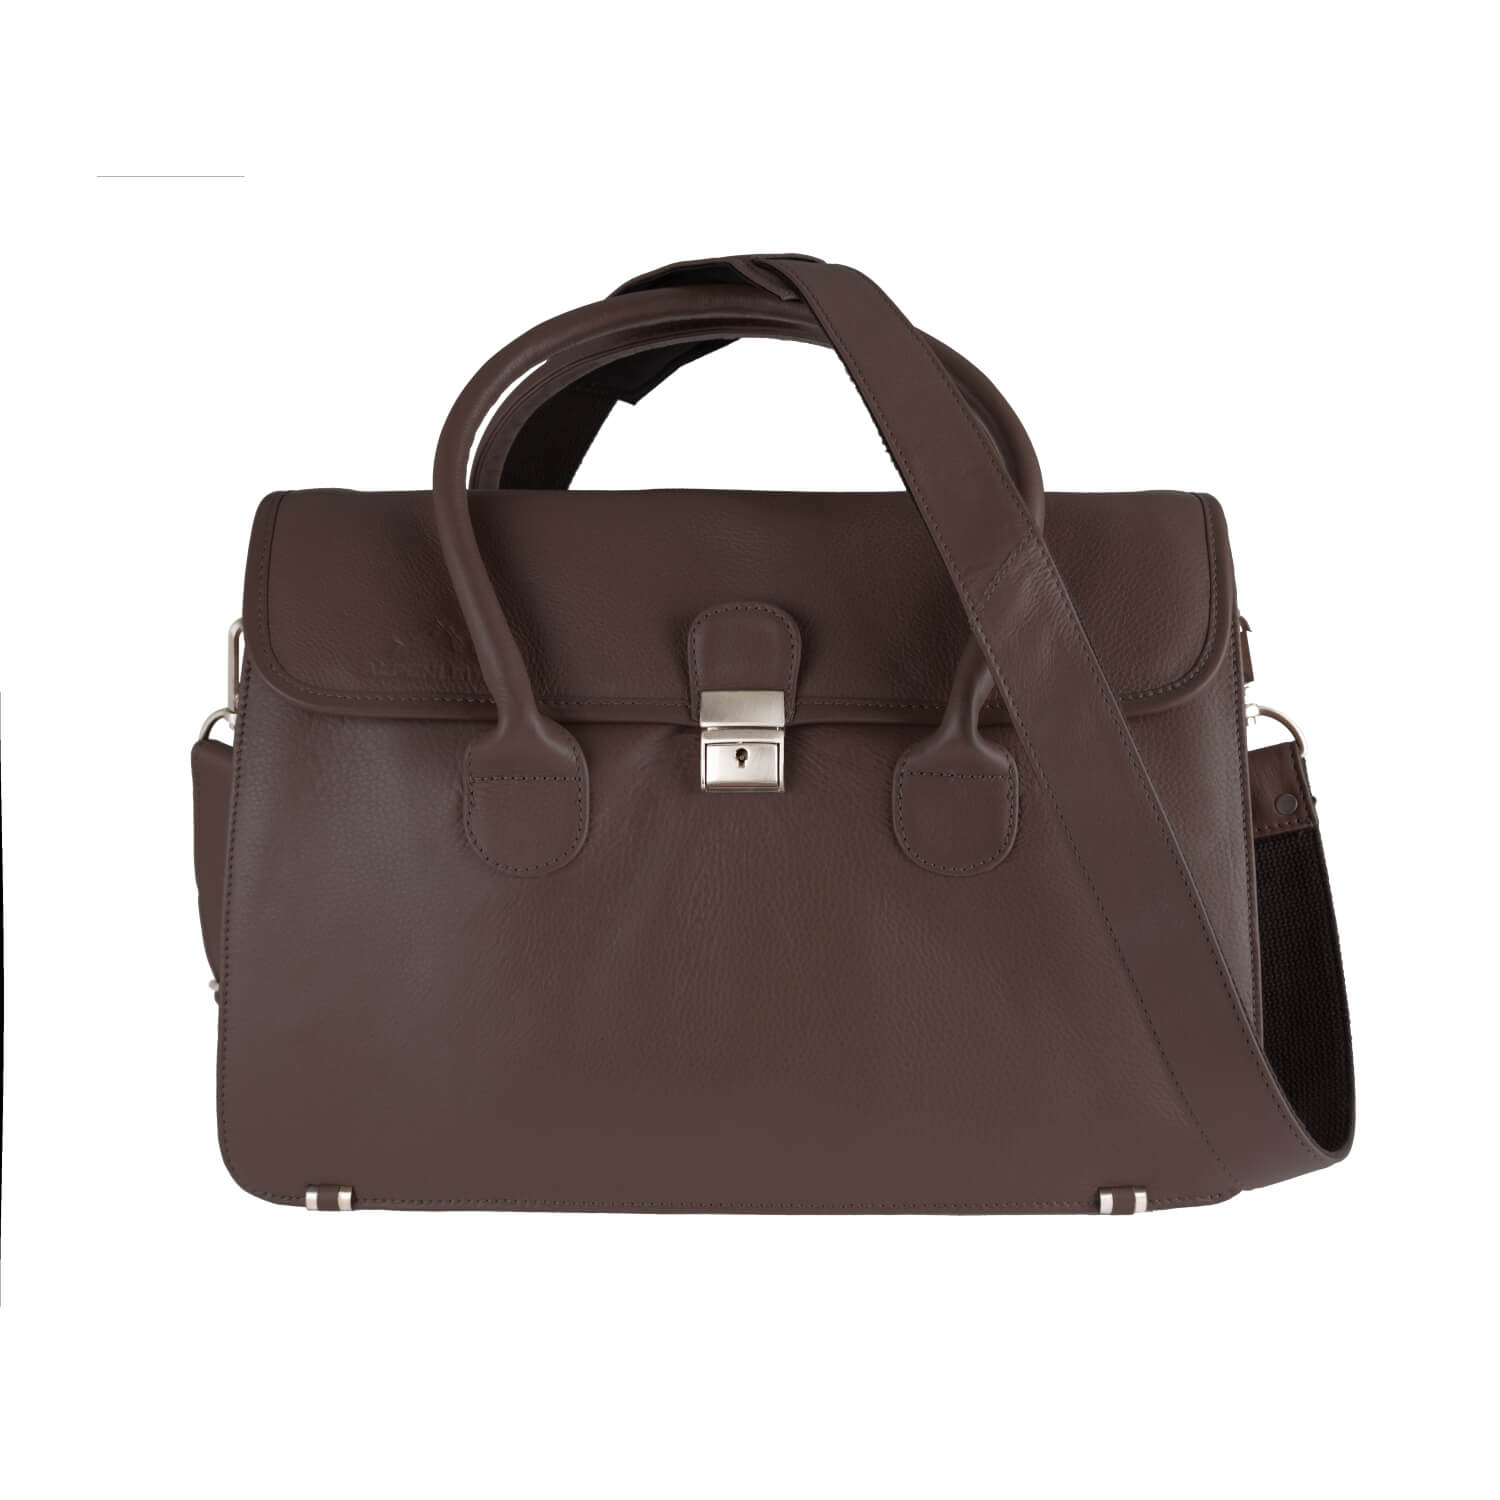 Louis Vuitton Aktentasche Tasche Business Damen Herren